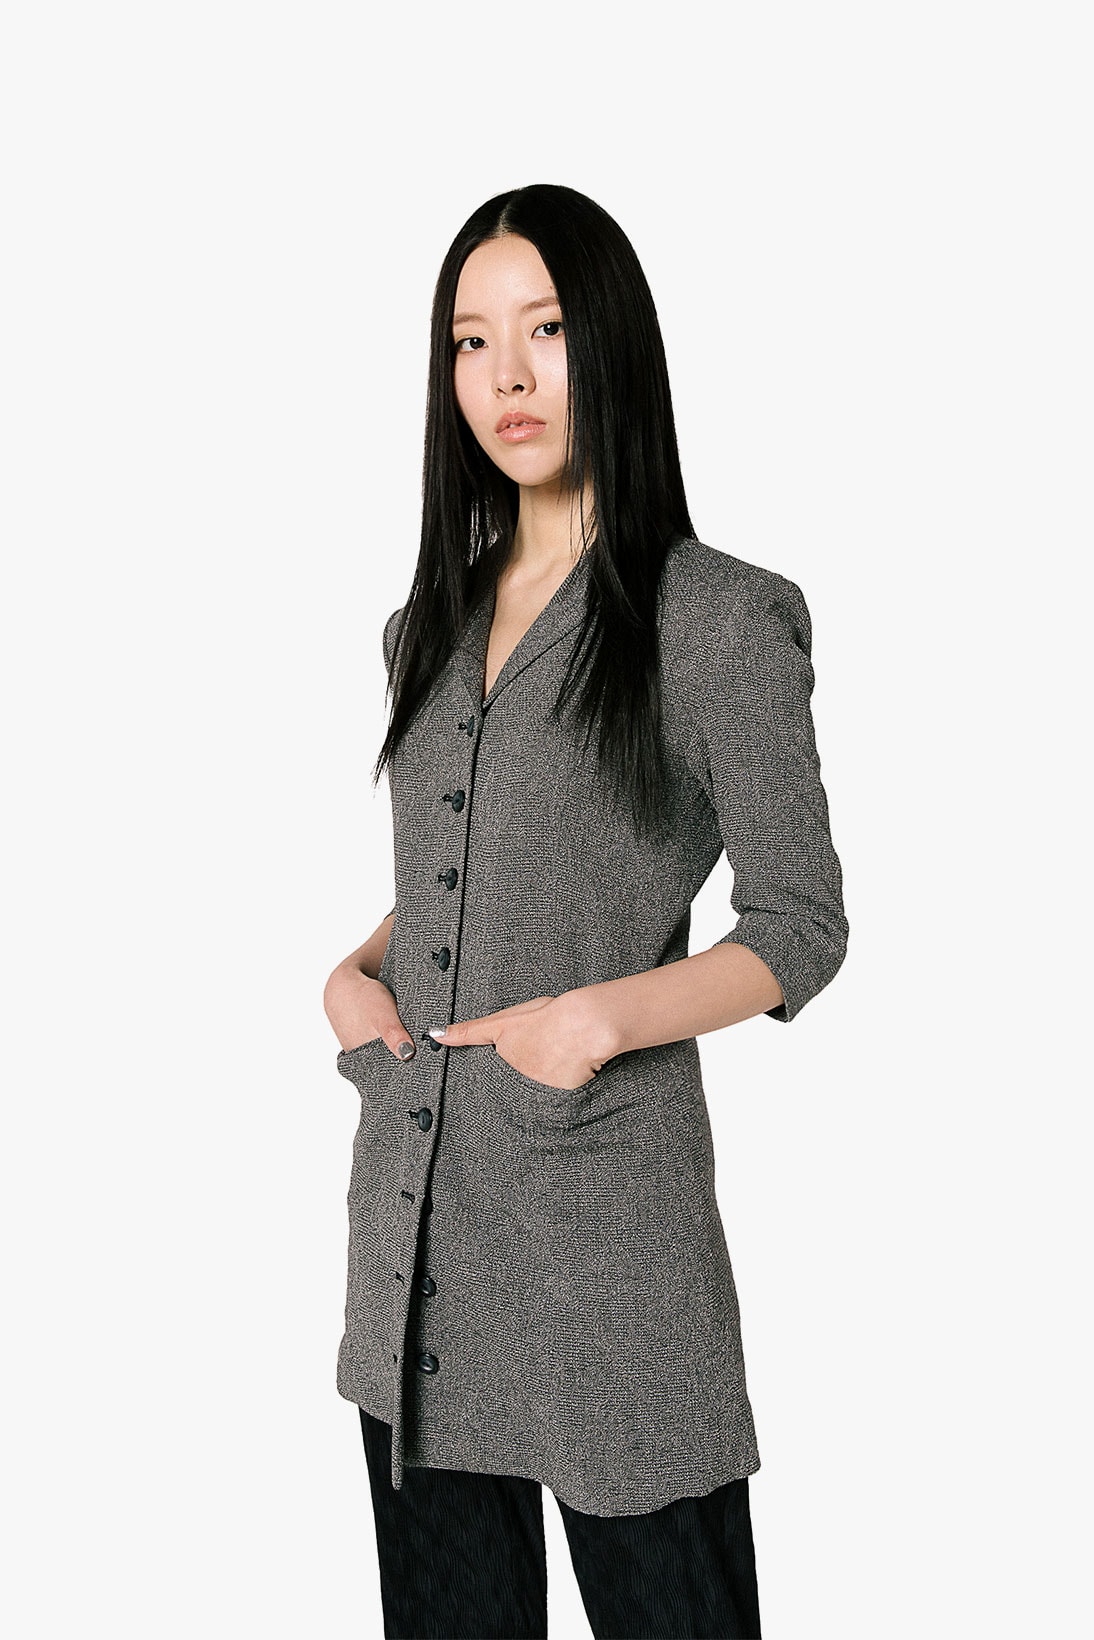 MISCHIEF Spring Summer 2020 10th Anniversary Seoul Since2010 Lookbook Lim Kim Korean Fashion Brands